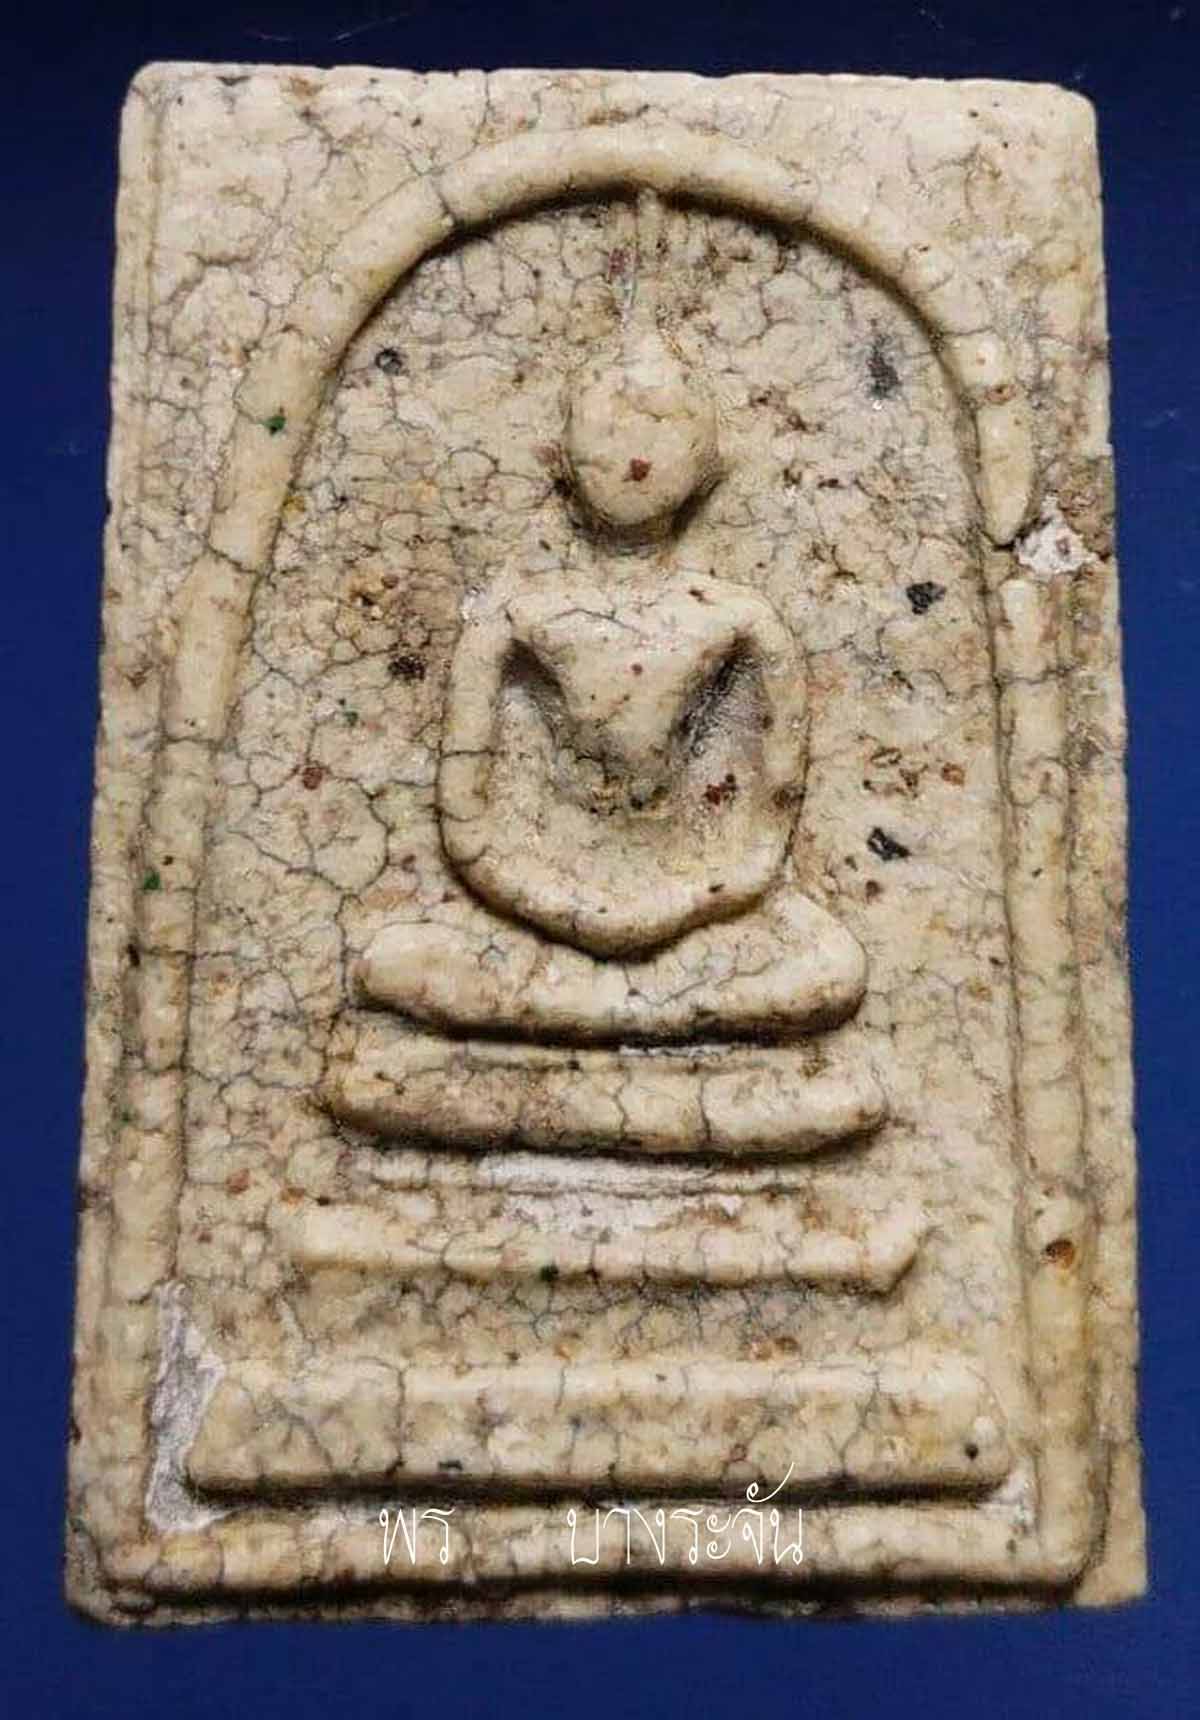 King of all Thai Amulets  Pra Somdej Wat Rakang by Somdej Pra Puttajarn (Dto) Prohmrangsri.(勇)